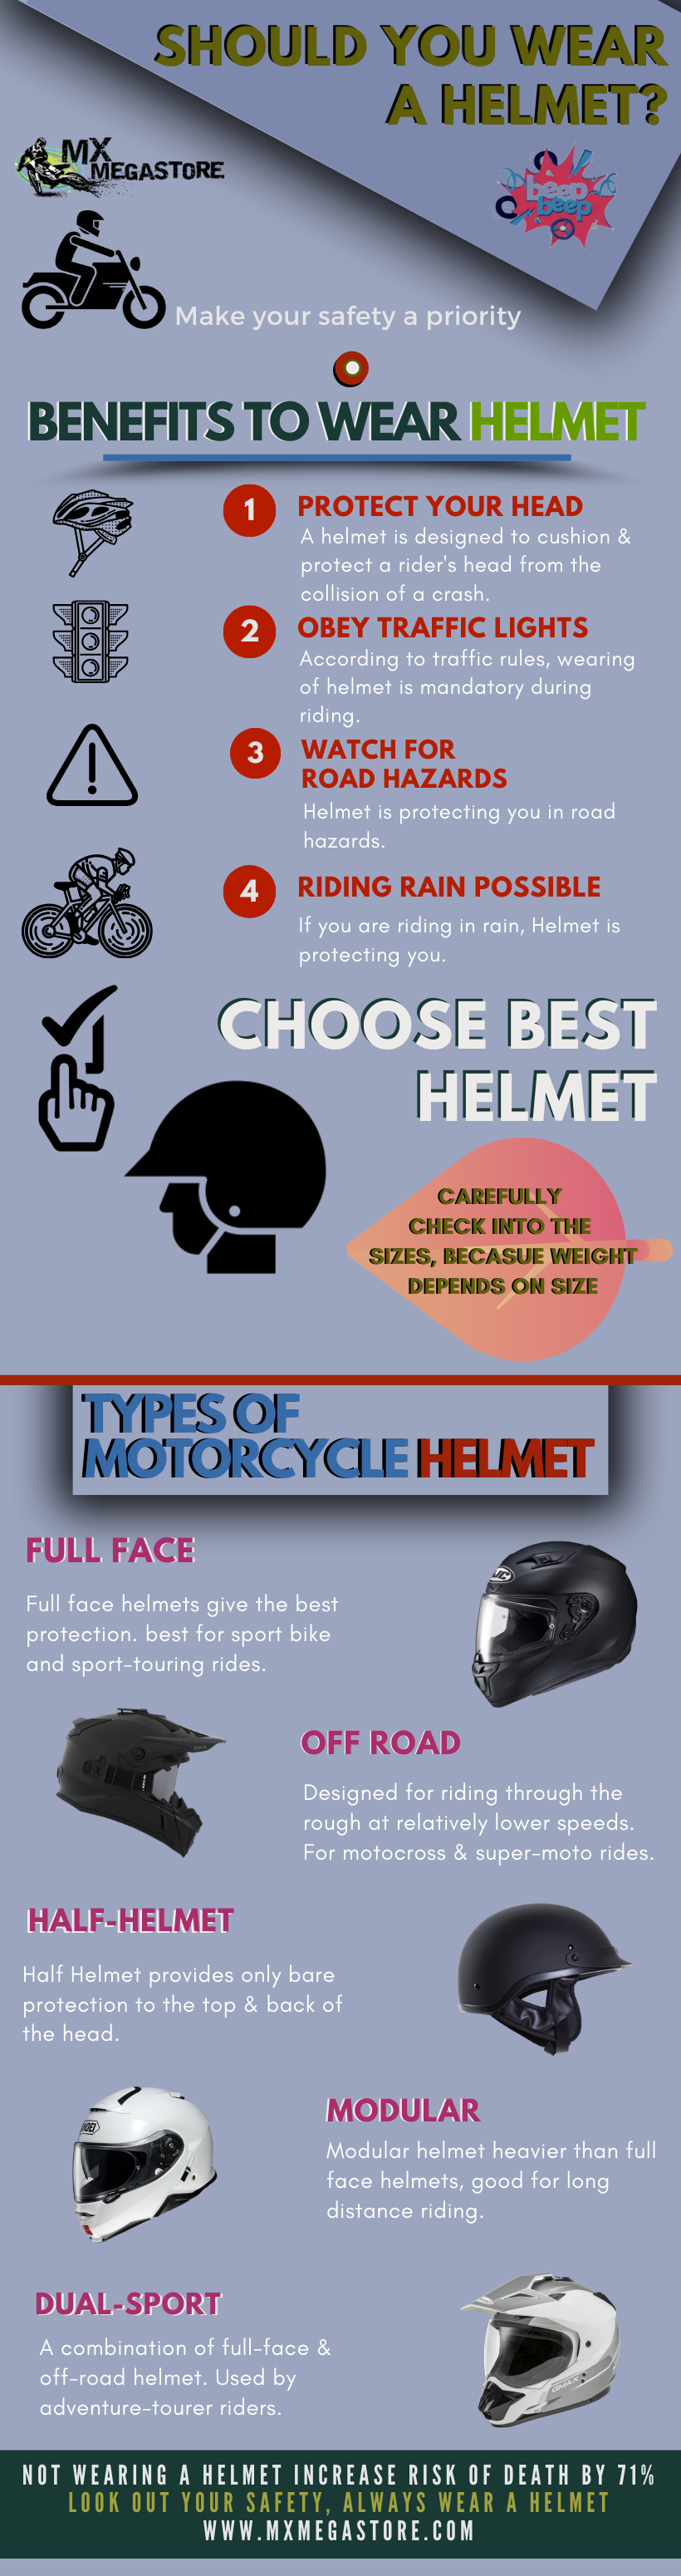 Should You Wear Helmet? Check Now for Benefits of Helmet